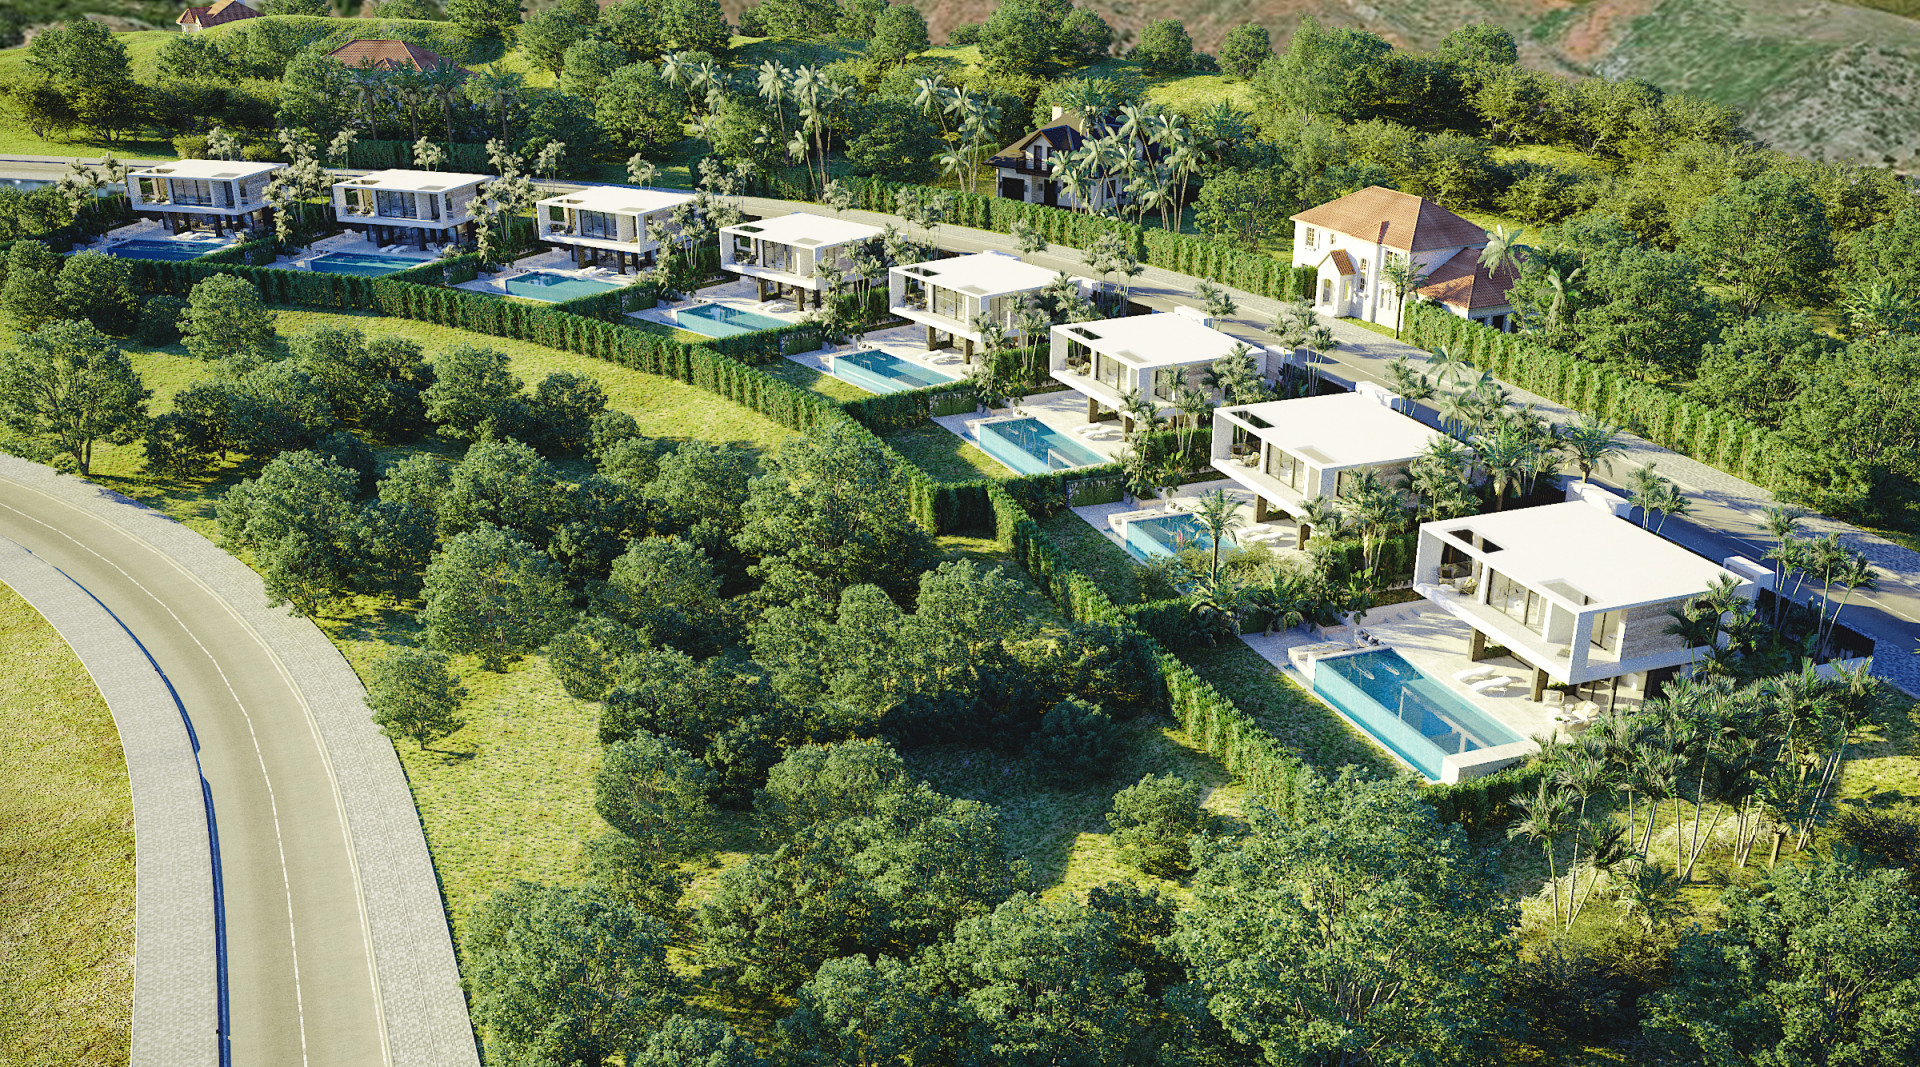 New Modern contemporary villas for sale in Estepona